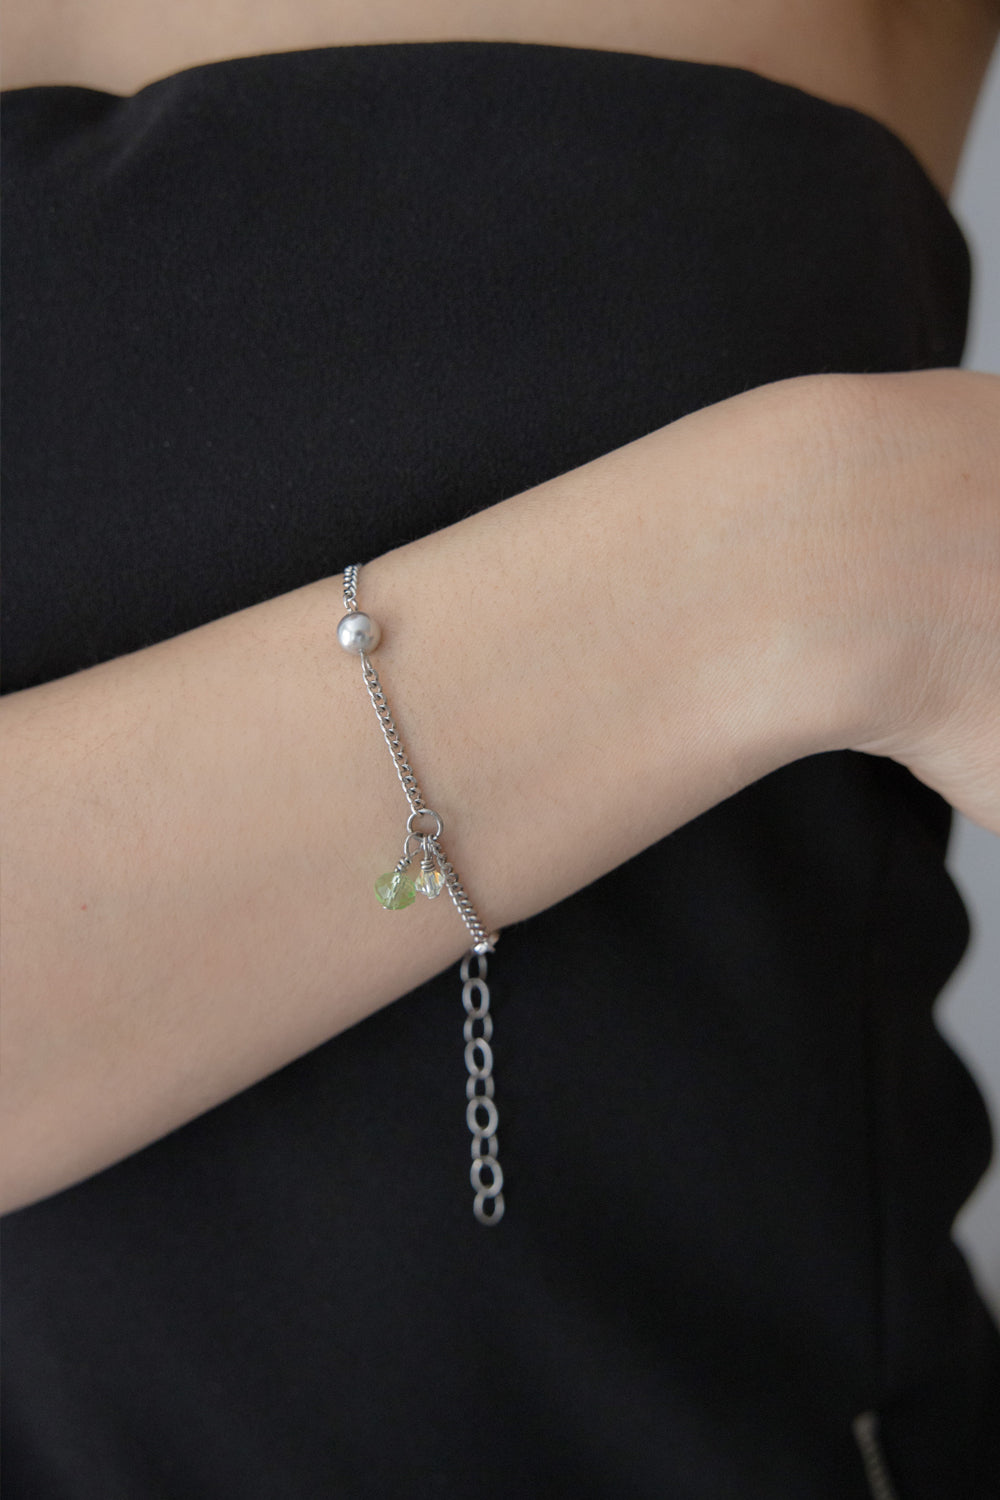 Applegreen point mix chain surgical bracelet